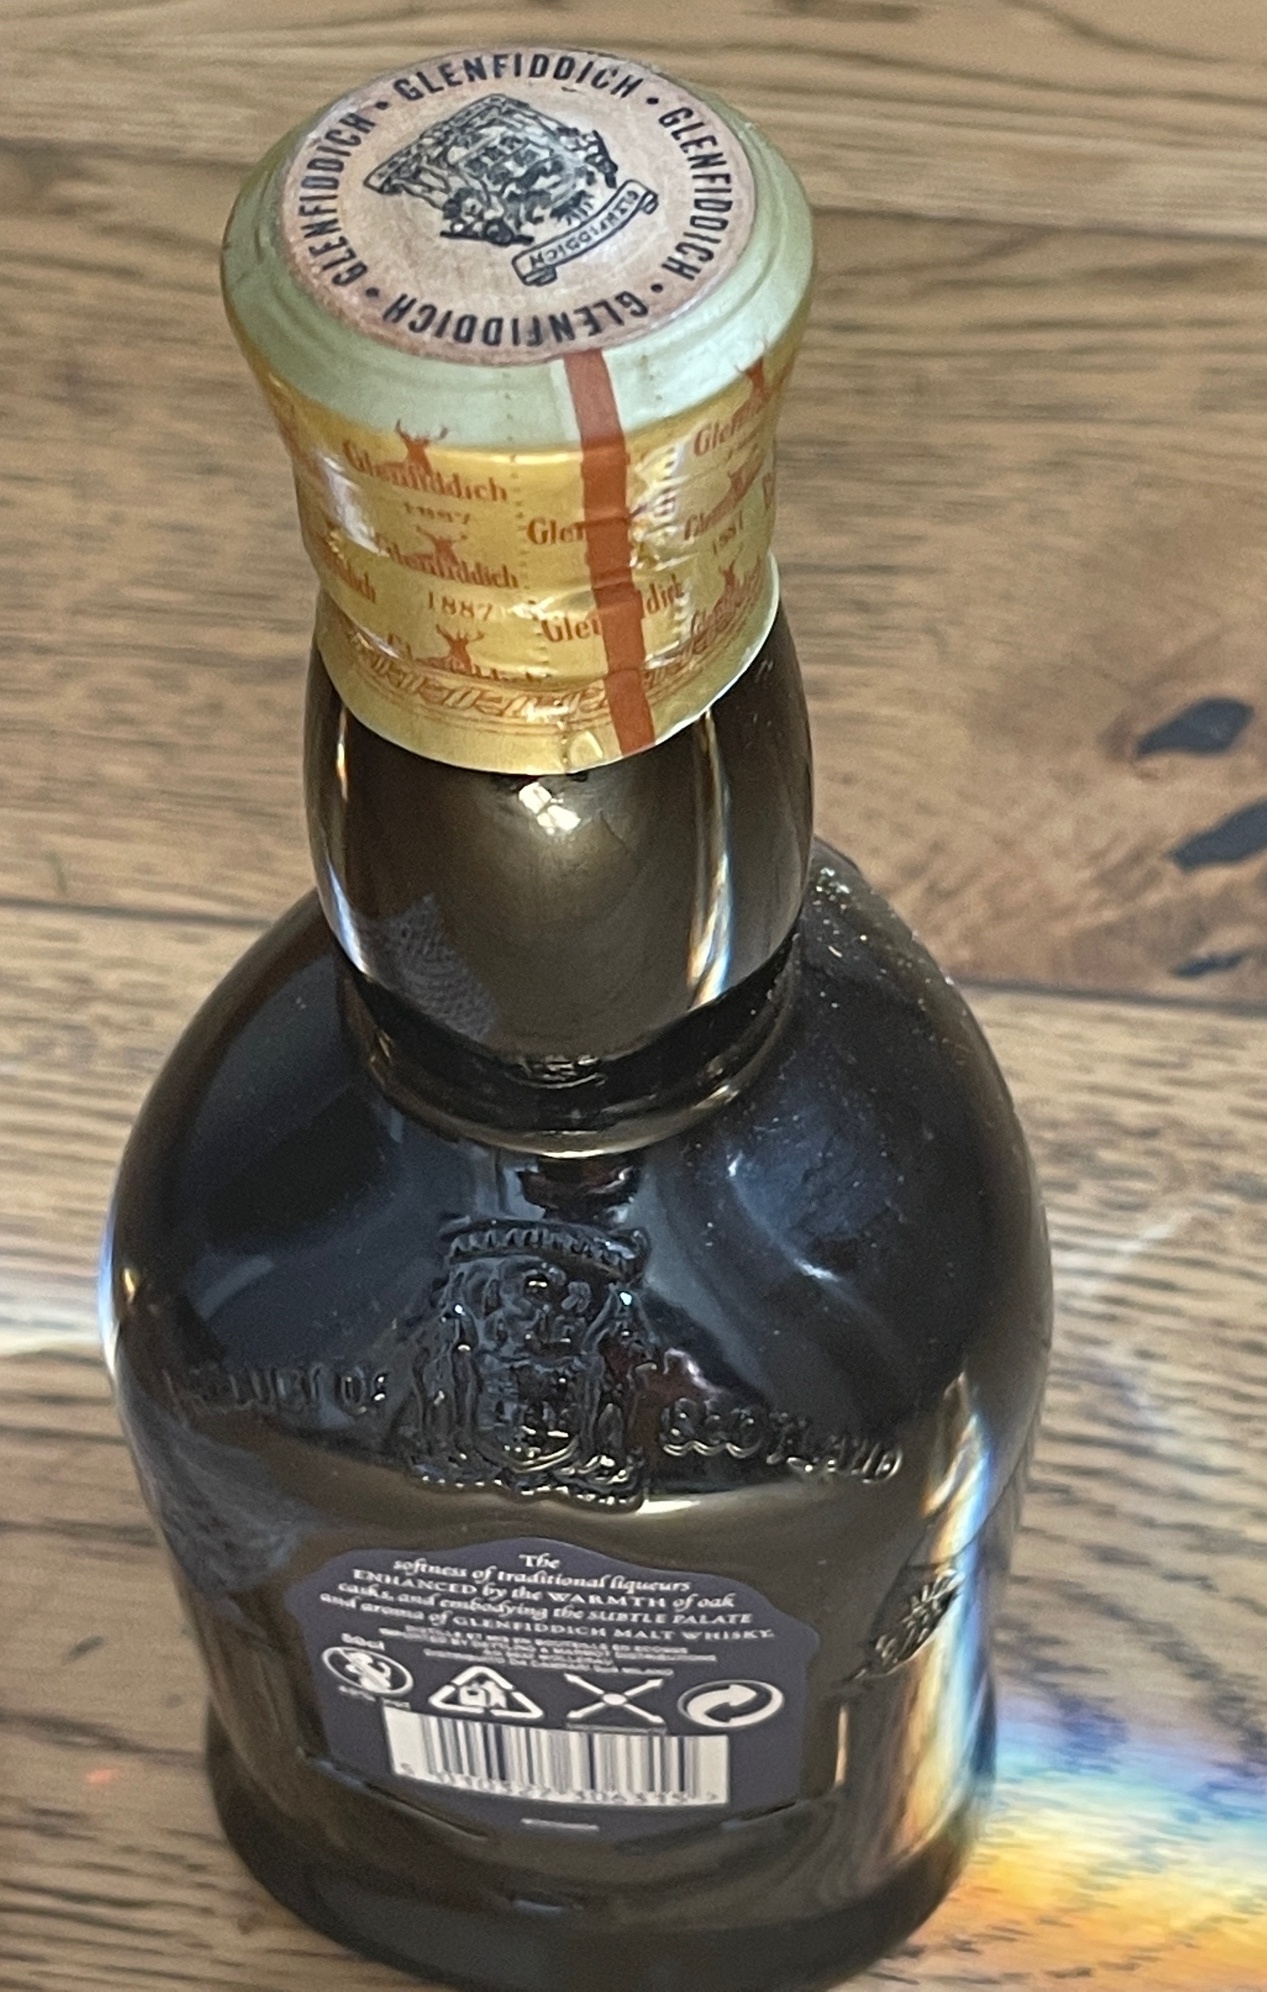 Bottle of Glenfiddich Malt Whisky Liquer - Bottle 4 of 5. - Image 4 of 5